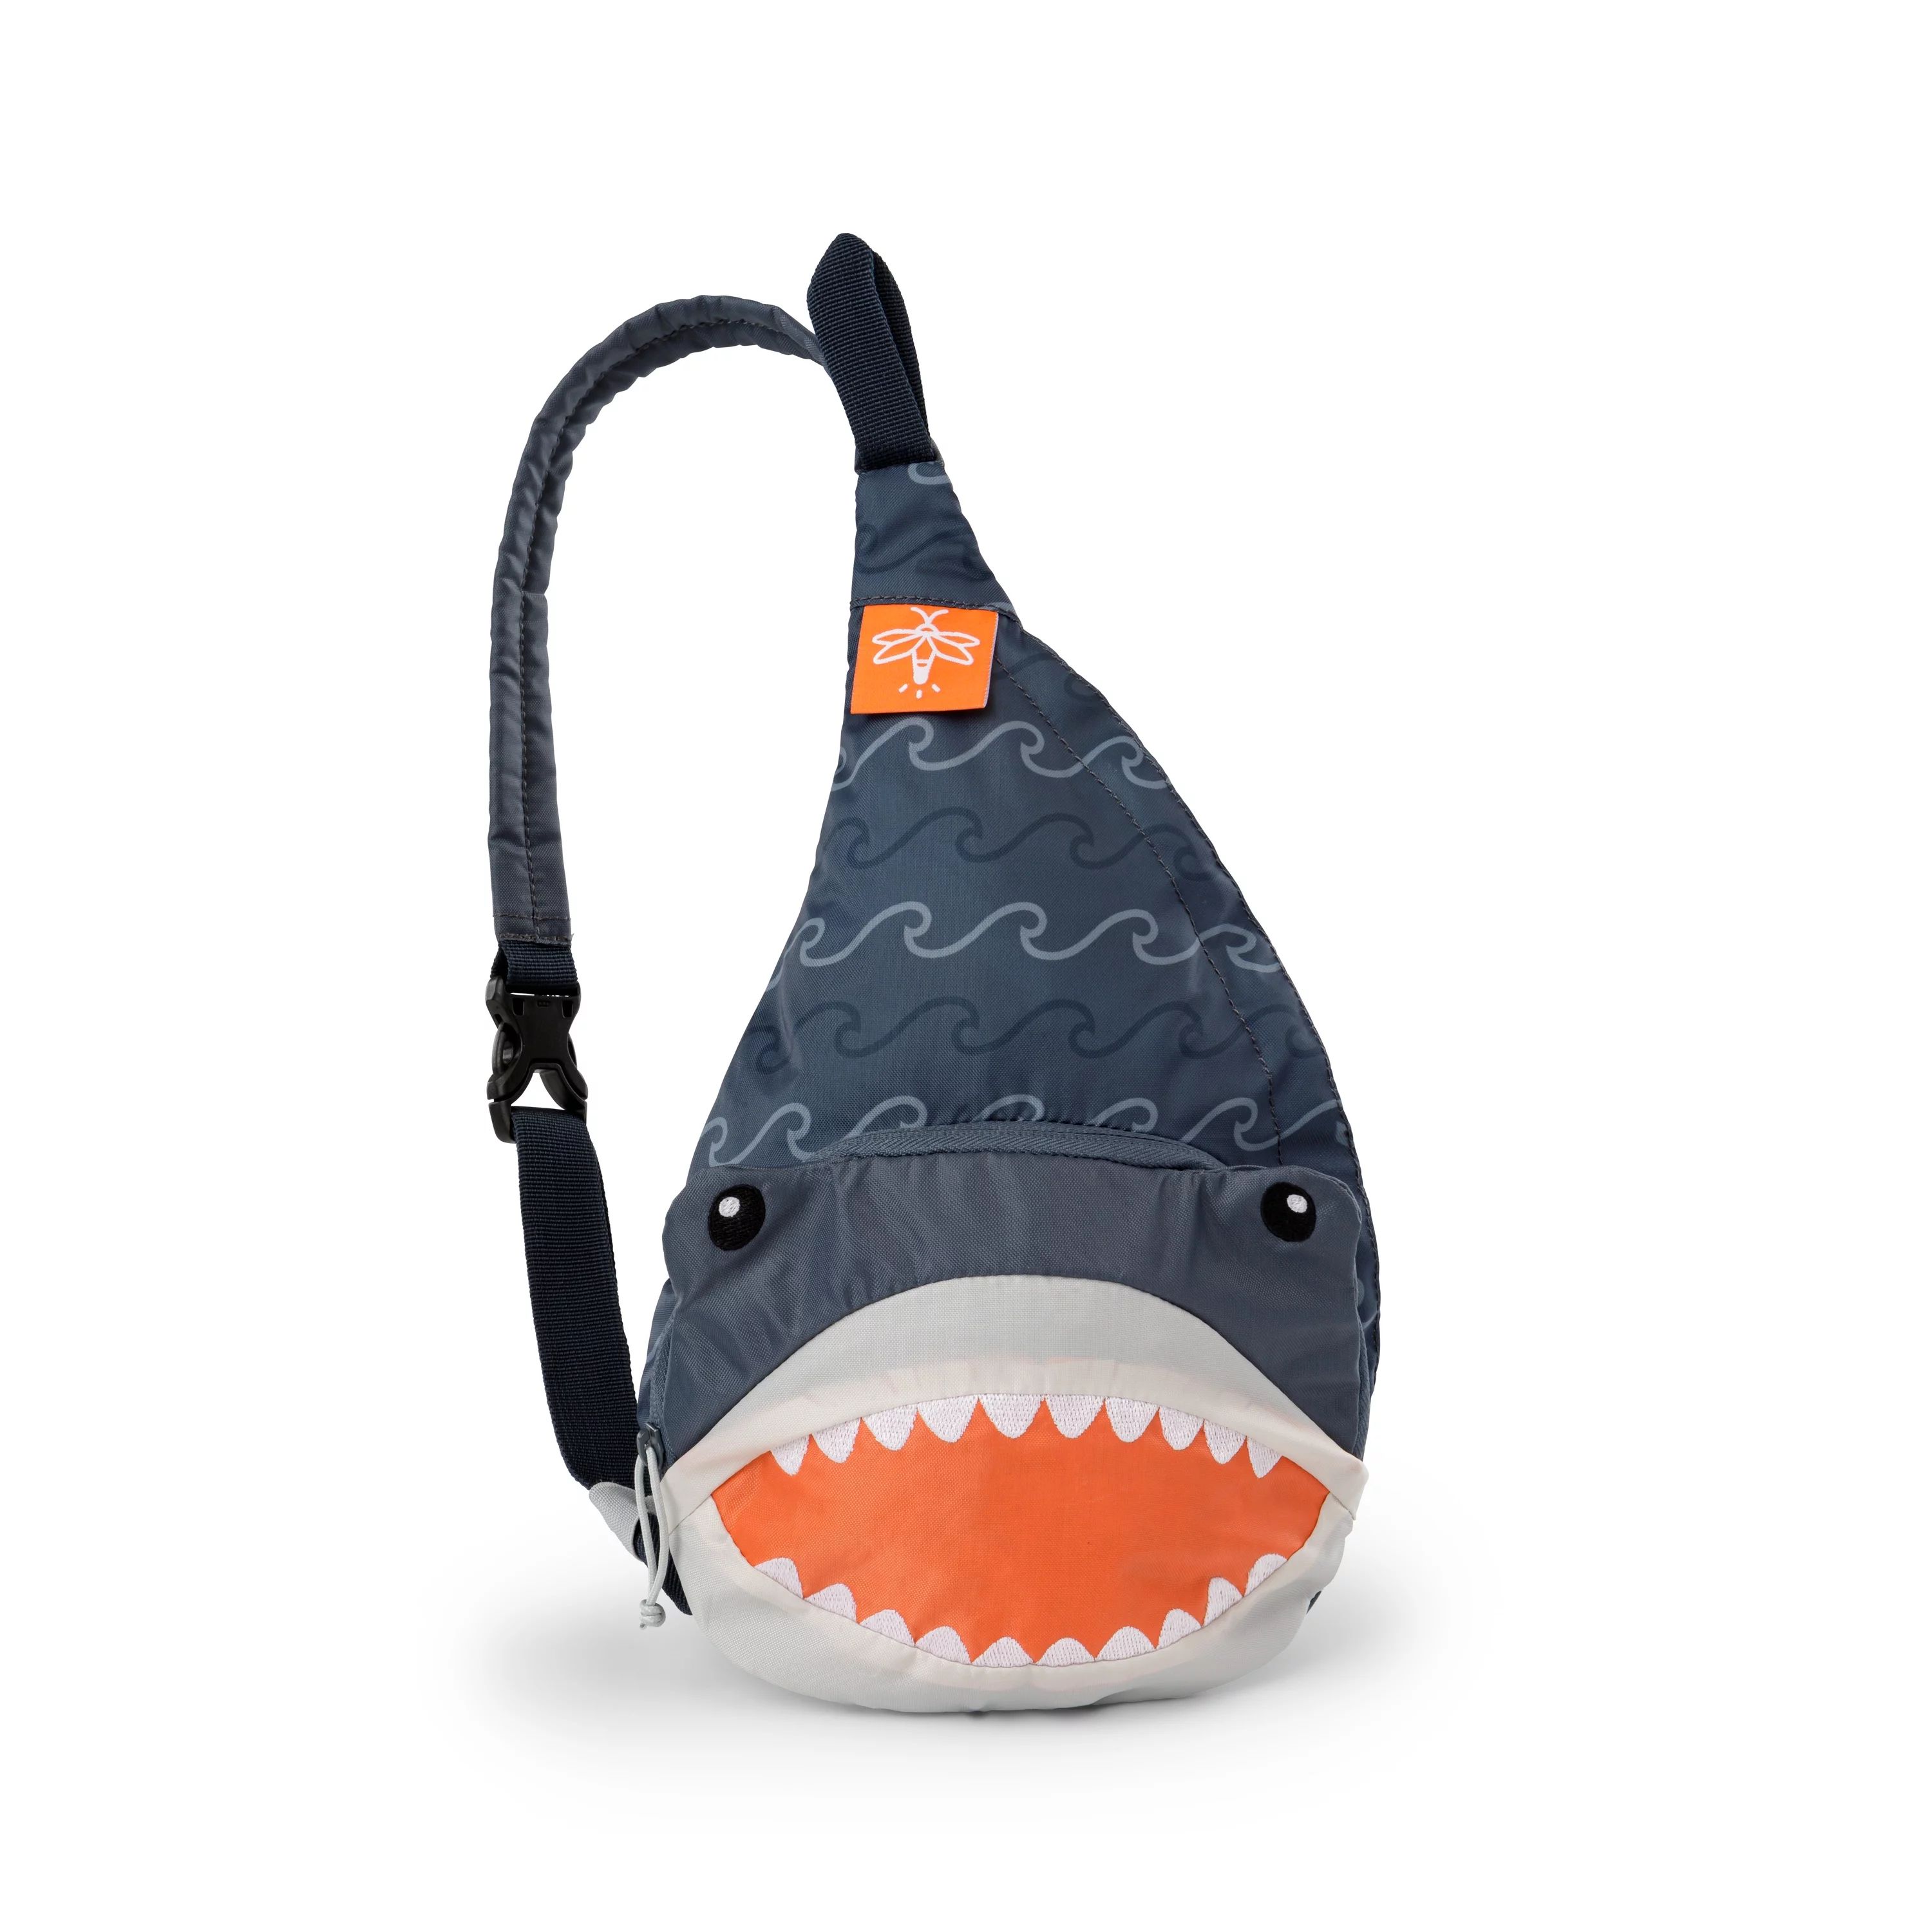 Firefly! Outdoor Gear Finn the Shark Sling Backpack, Navy and Gray, 3 Liter, Kids Backpack | Walmart (US)